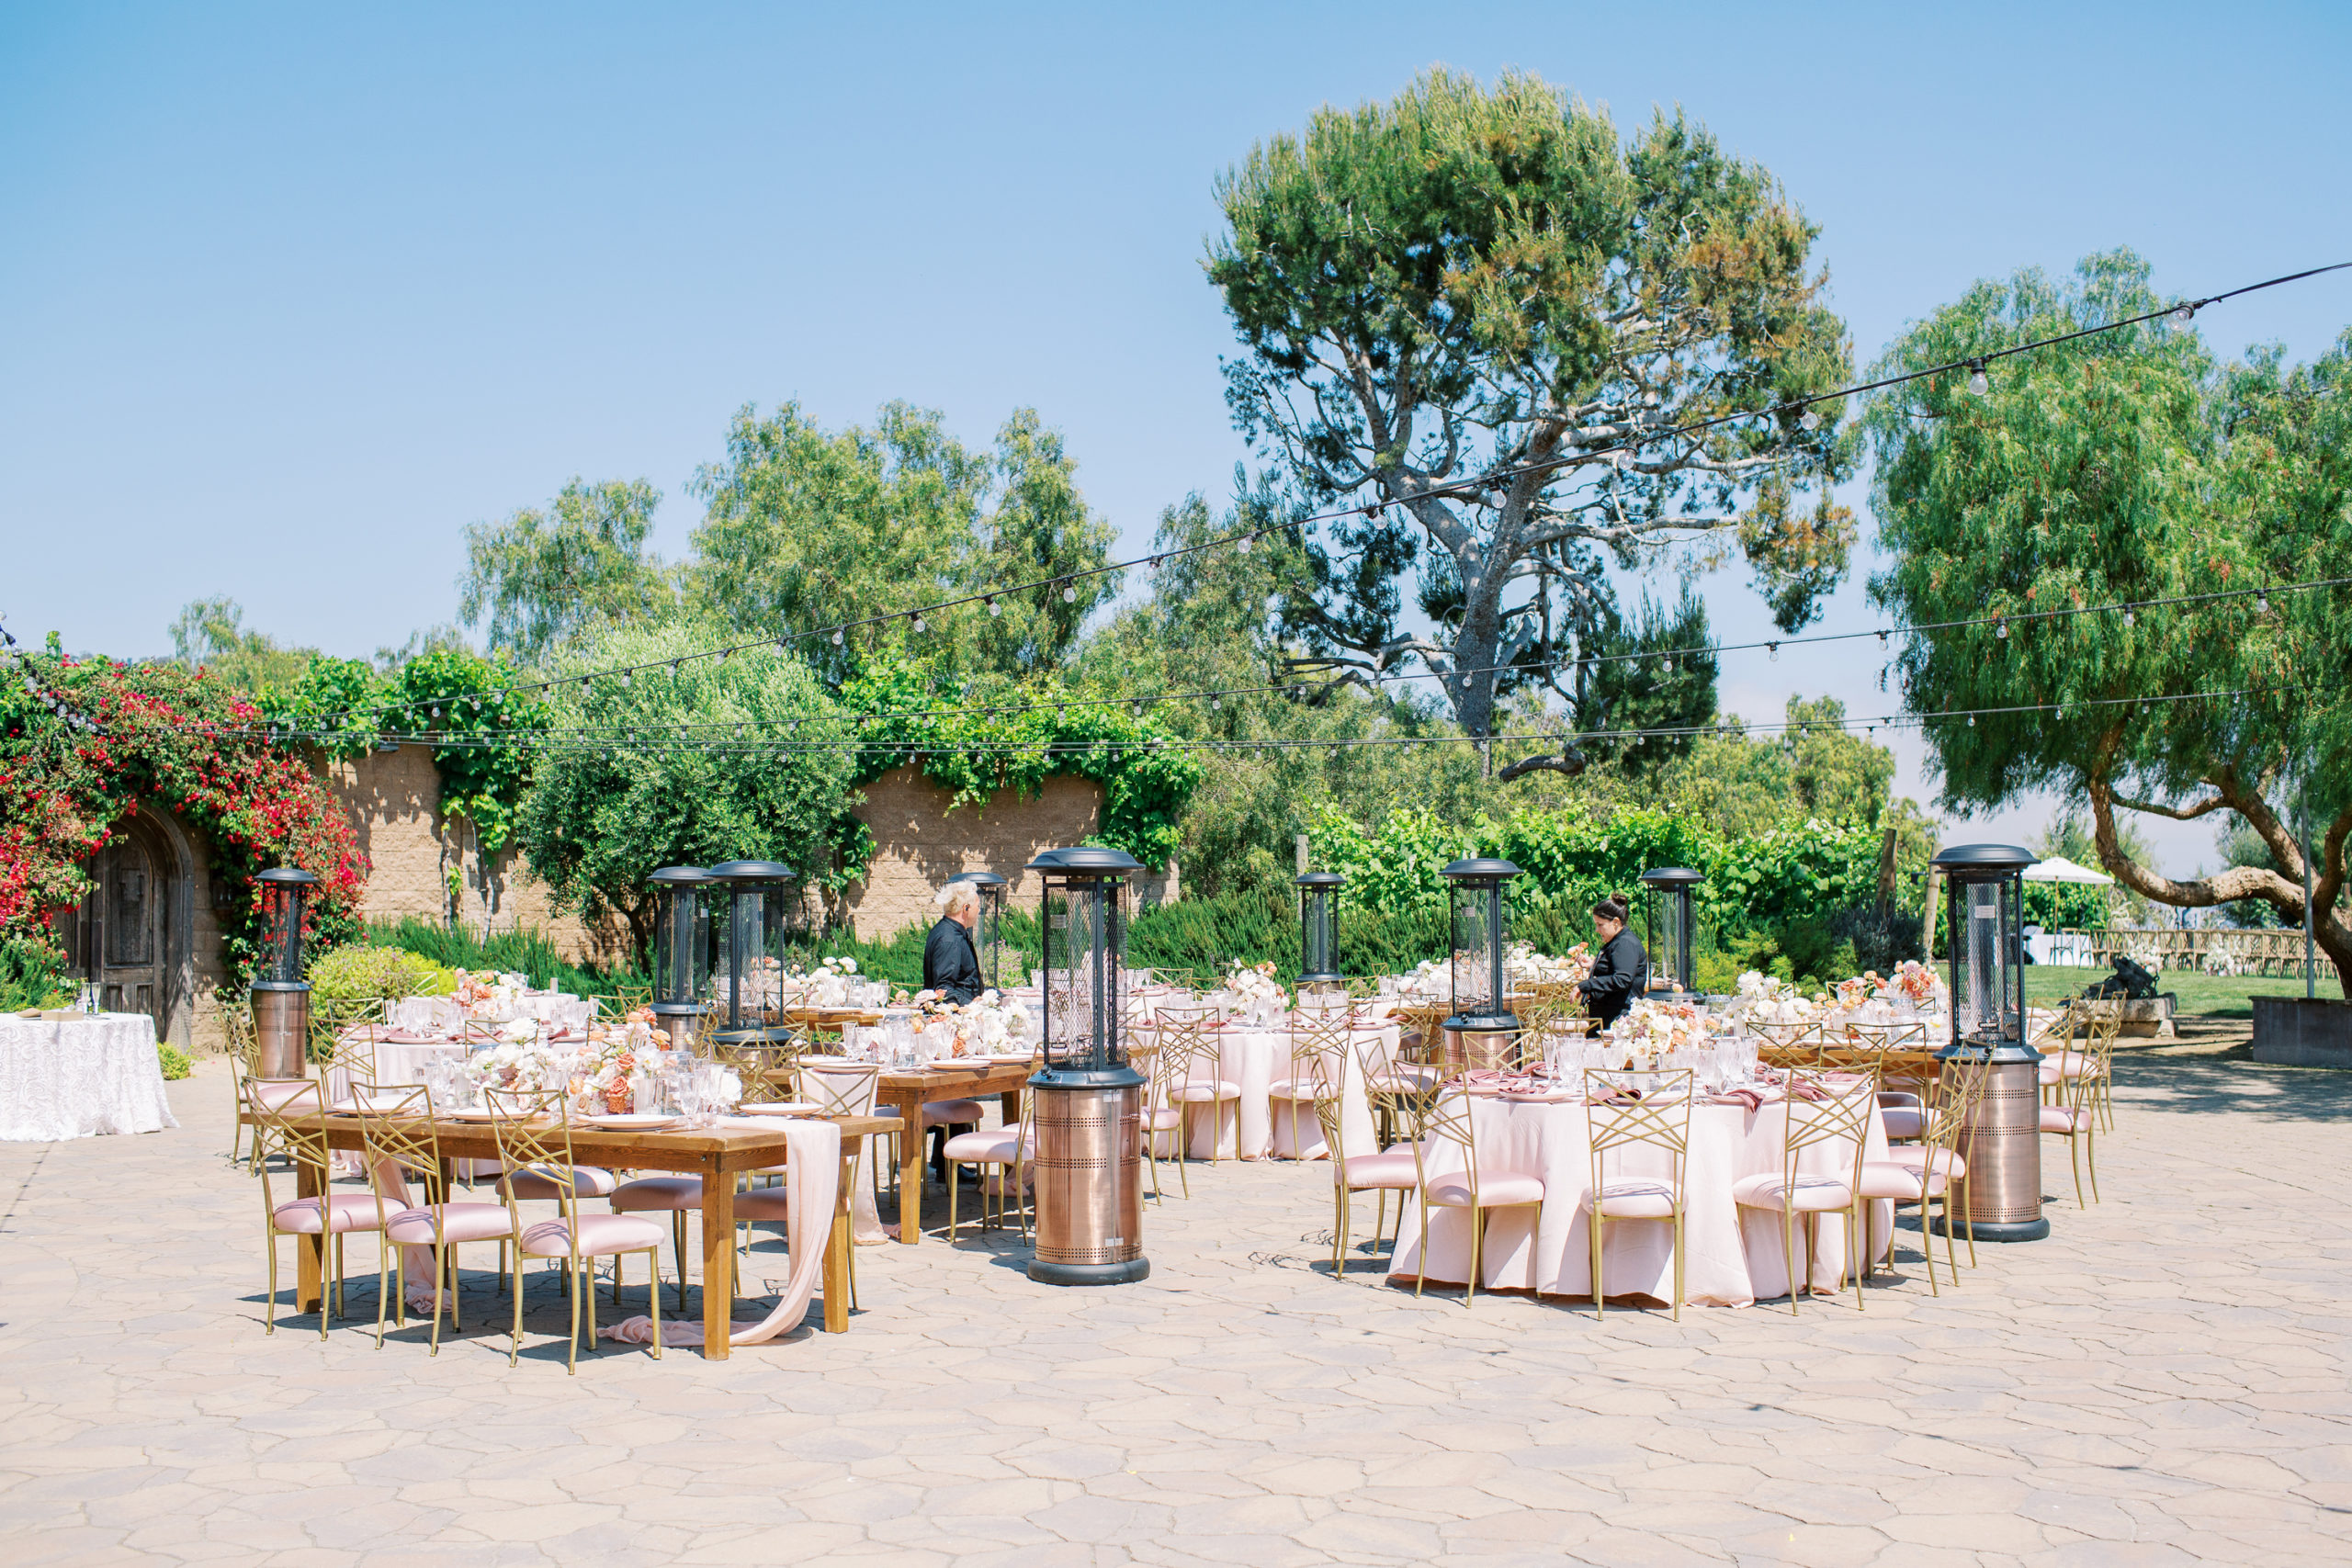 Catalina View Gardens Wedding - Reception